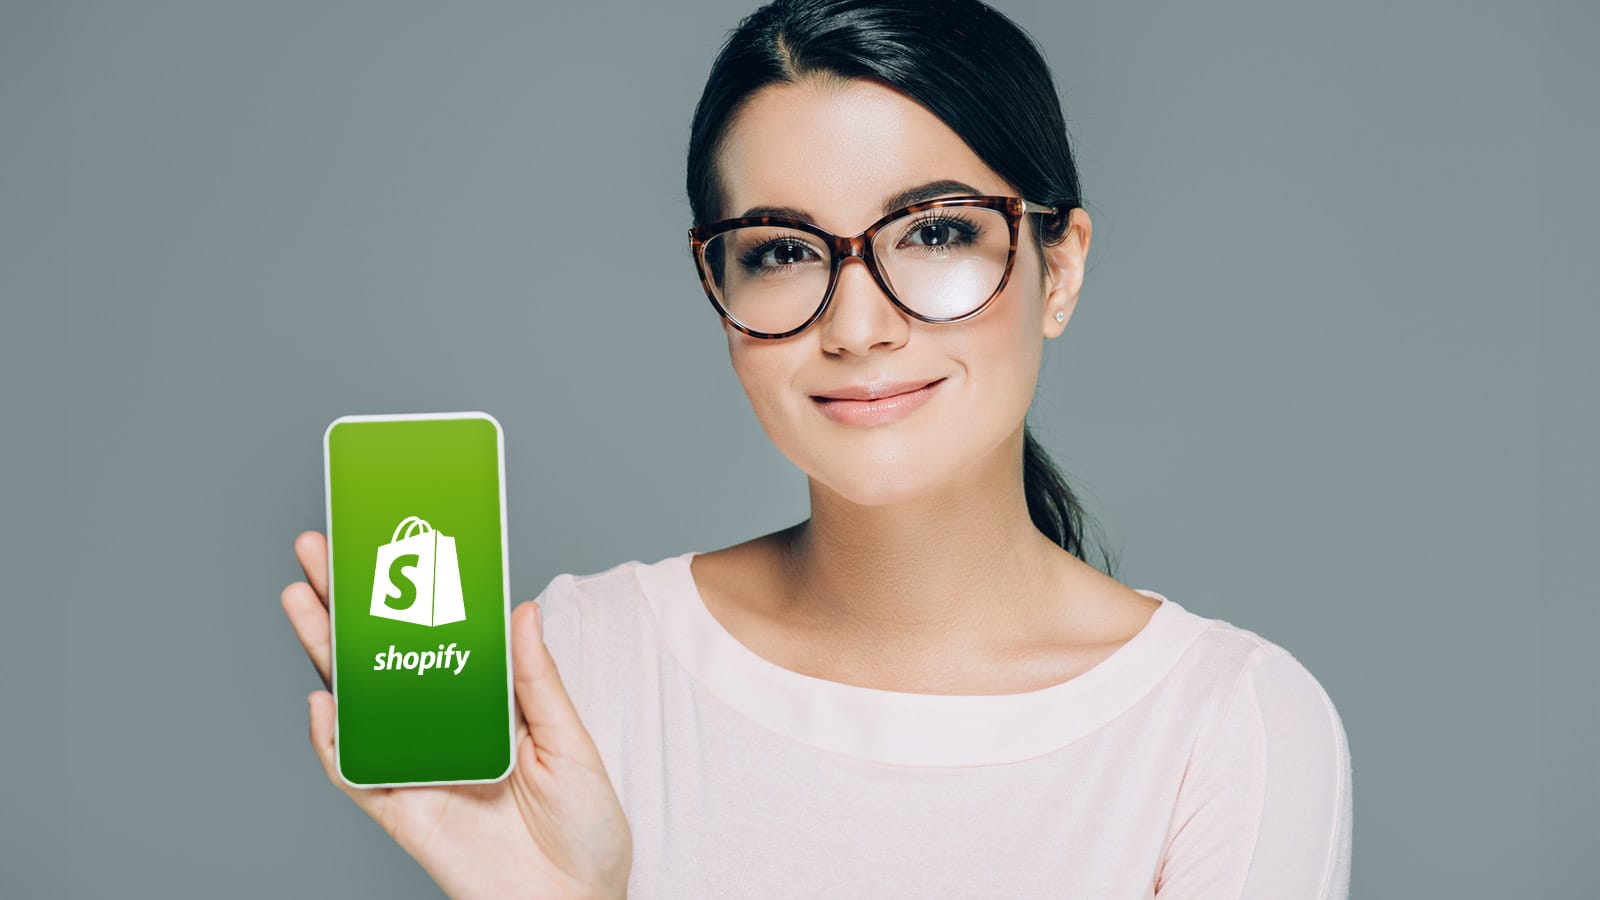 shopify apps mobile woman